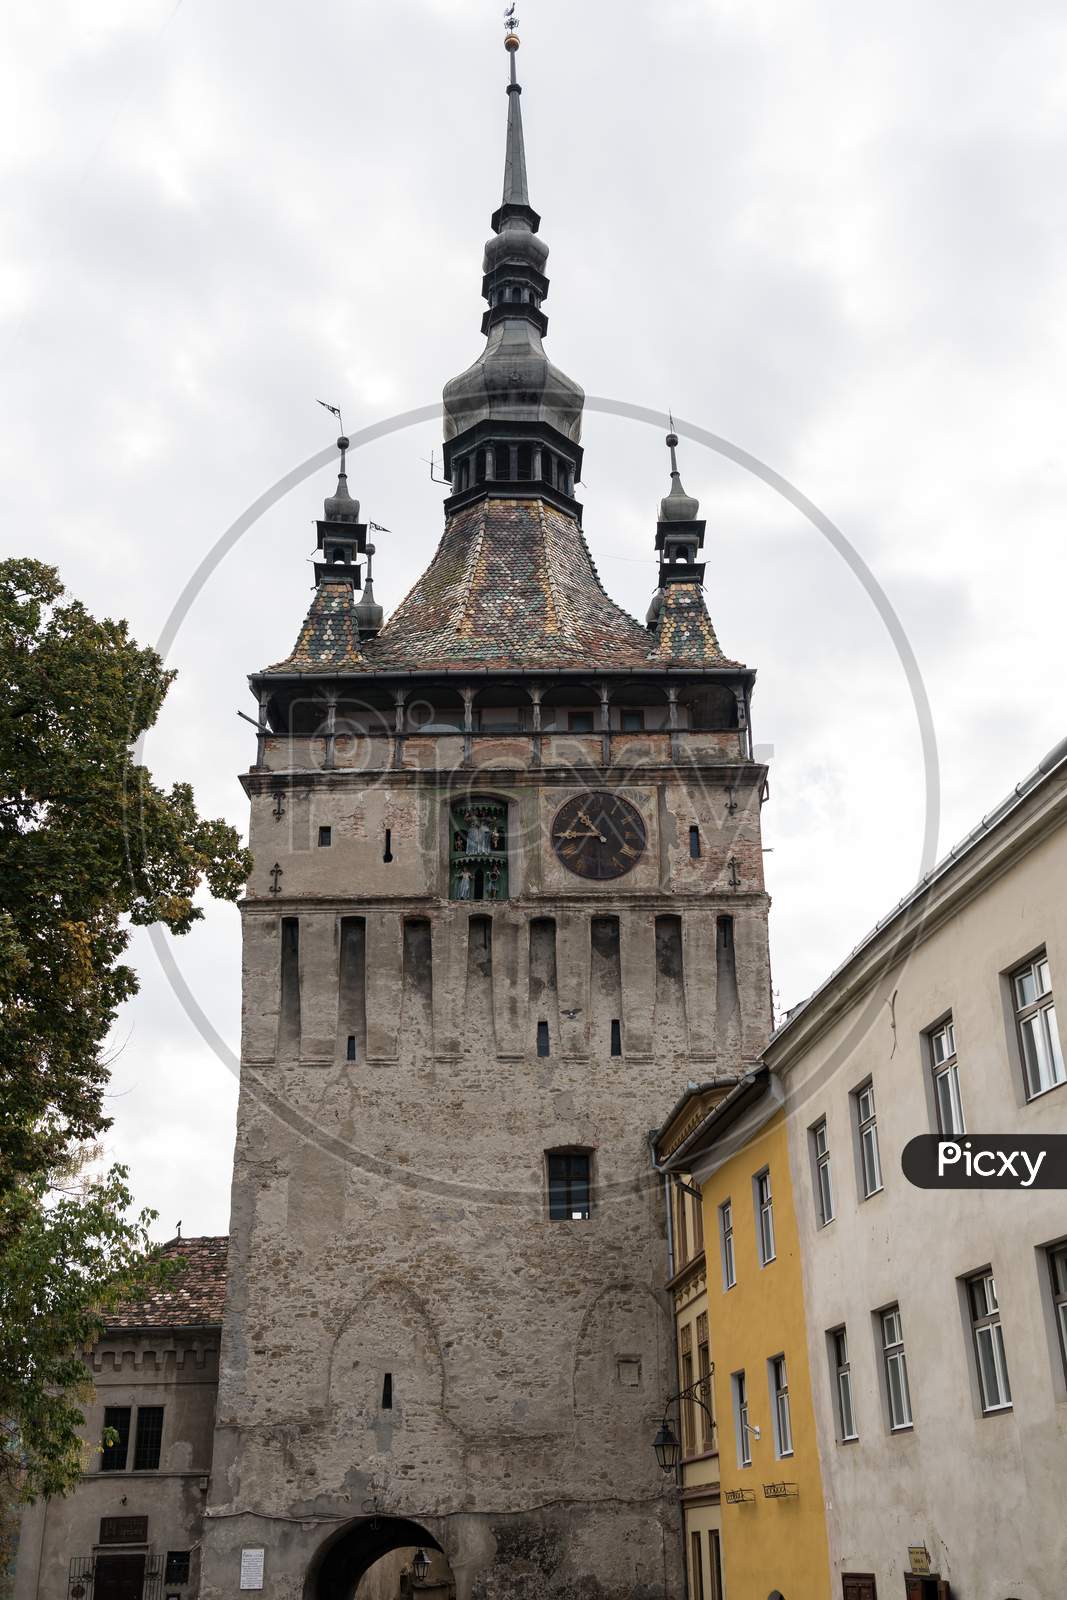 Sighisoara, Transylvania/Romania - September 17 : The Clock Tower Gateway To Sighisoara Transylvania Romania On September 17, 2018